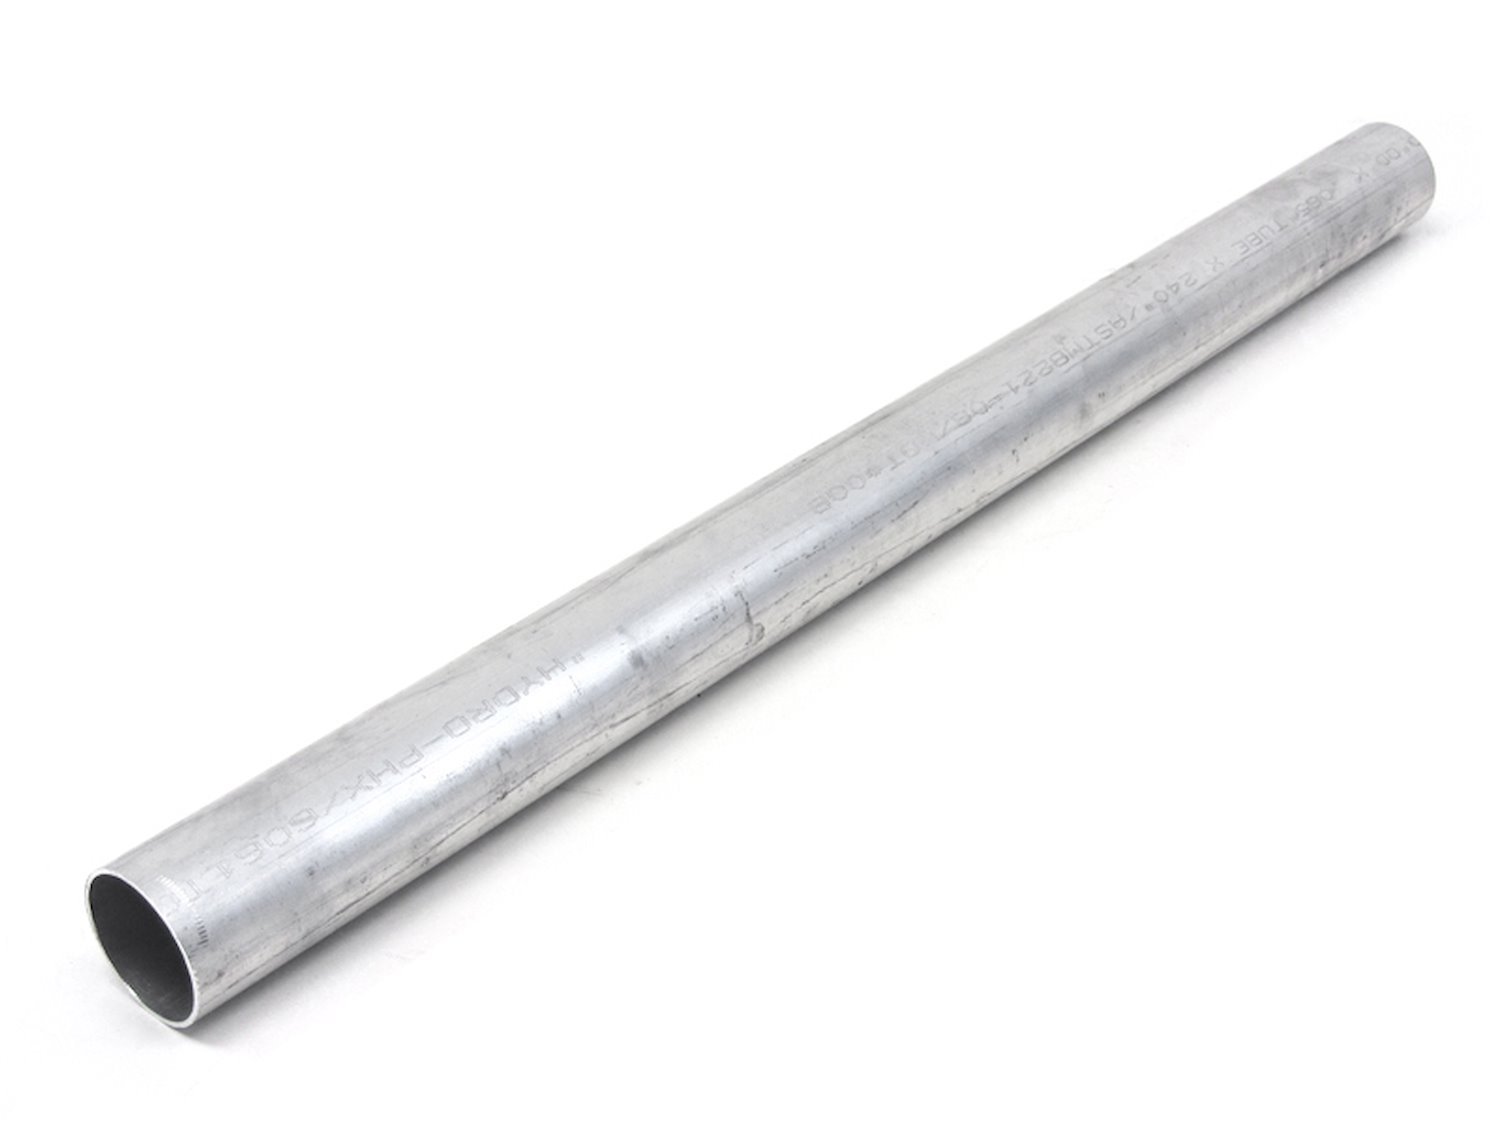 AST-2F-162 Aluminum Tubing, 6061 Aluminum, Straight Tubing, 1-5/8 in. OD, Seamless, Raw Finish, 2 ft. Long